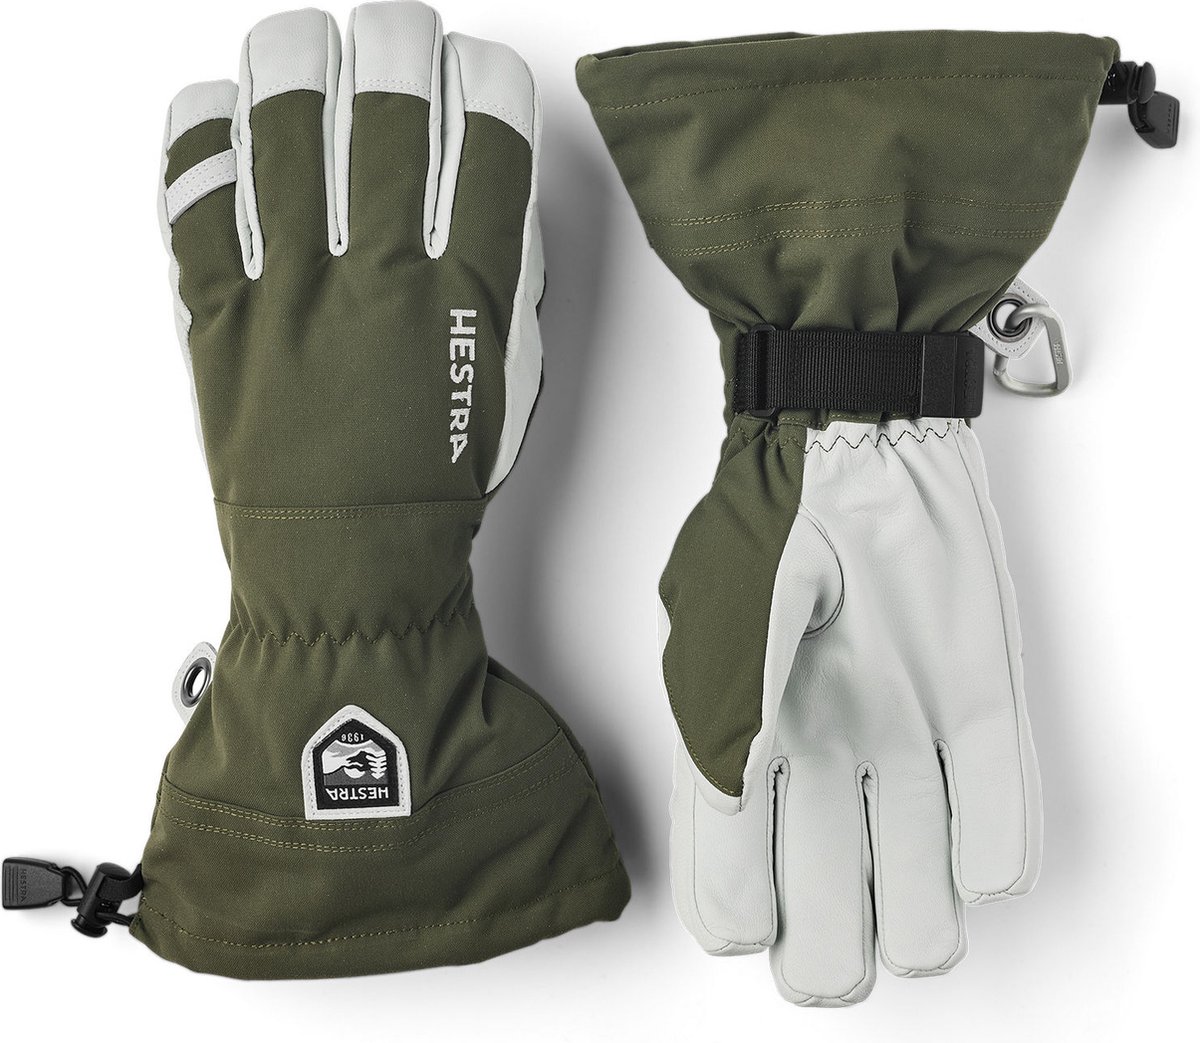 Hestra Army Leather Heli Ski - 5 finger -8 - Olive - Wintersport - Wintersportkleding - Handschoenen